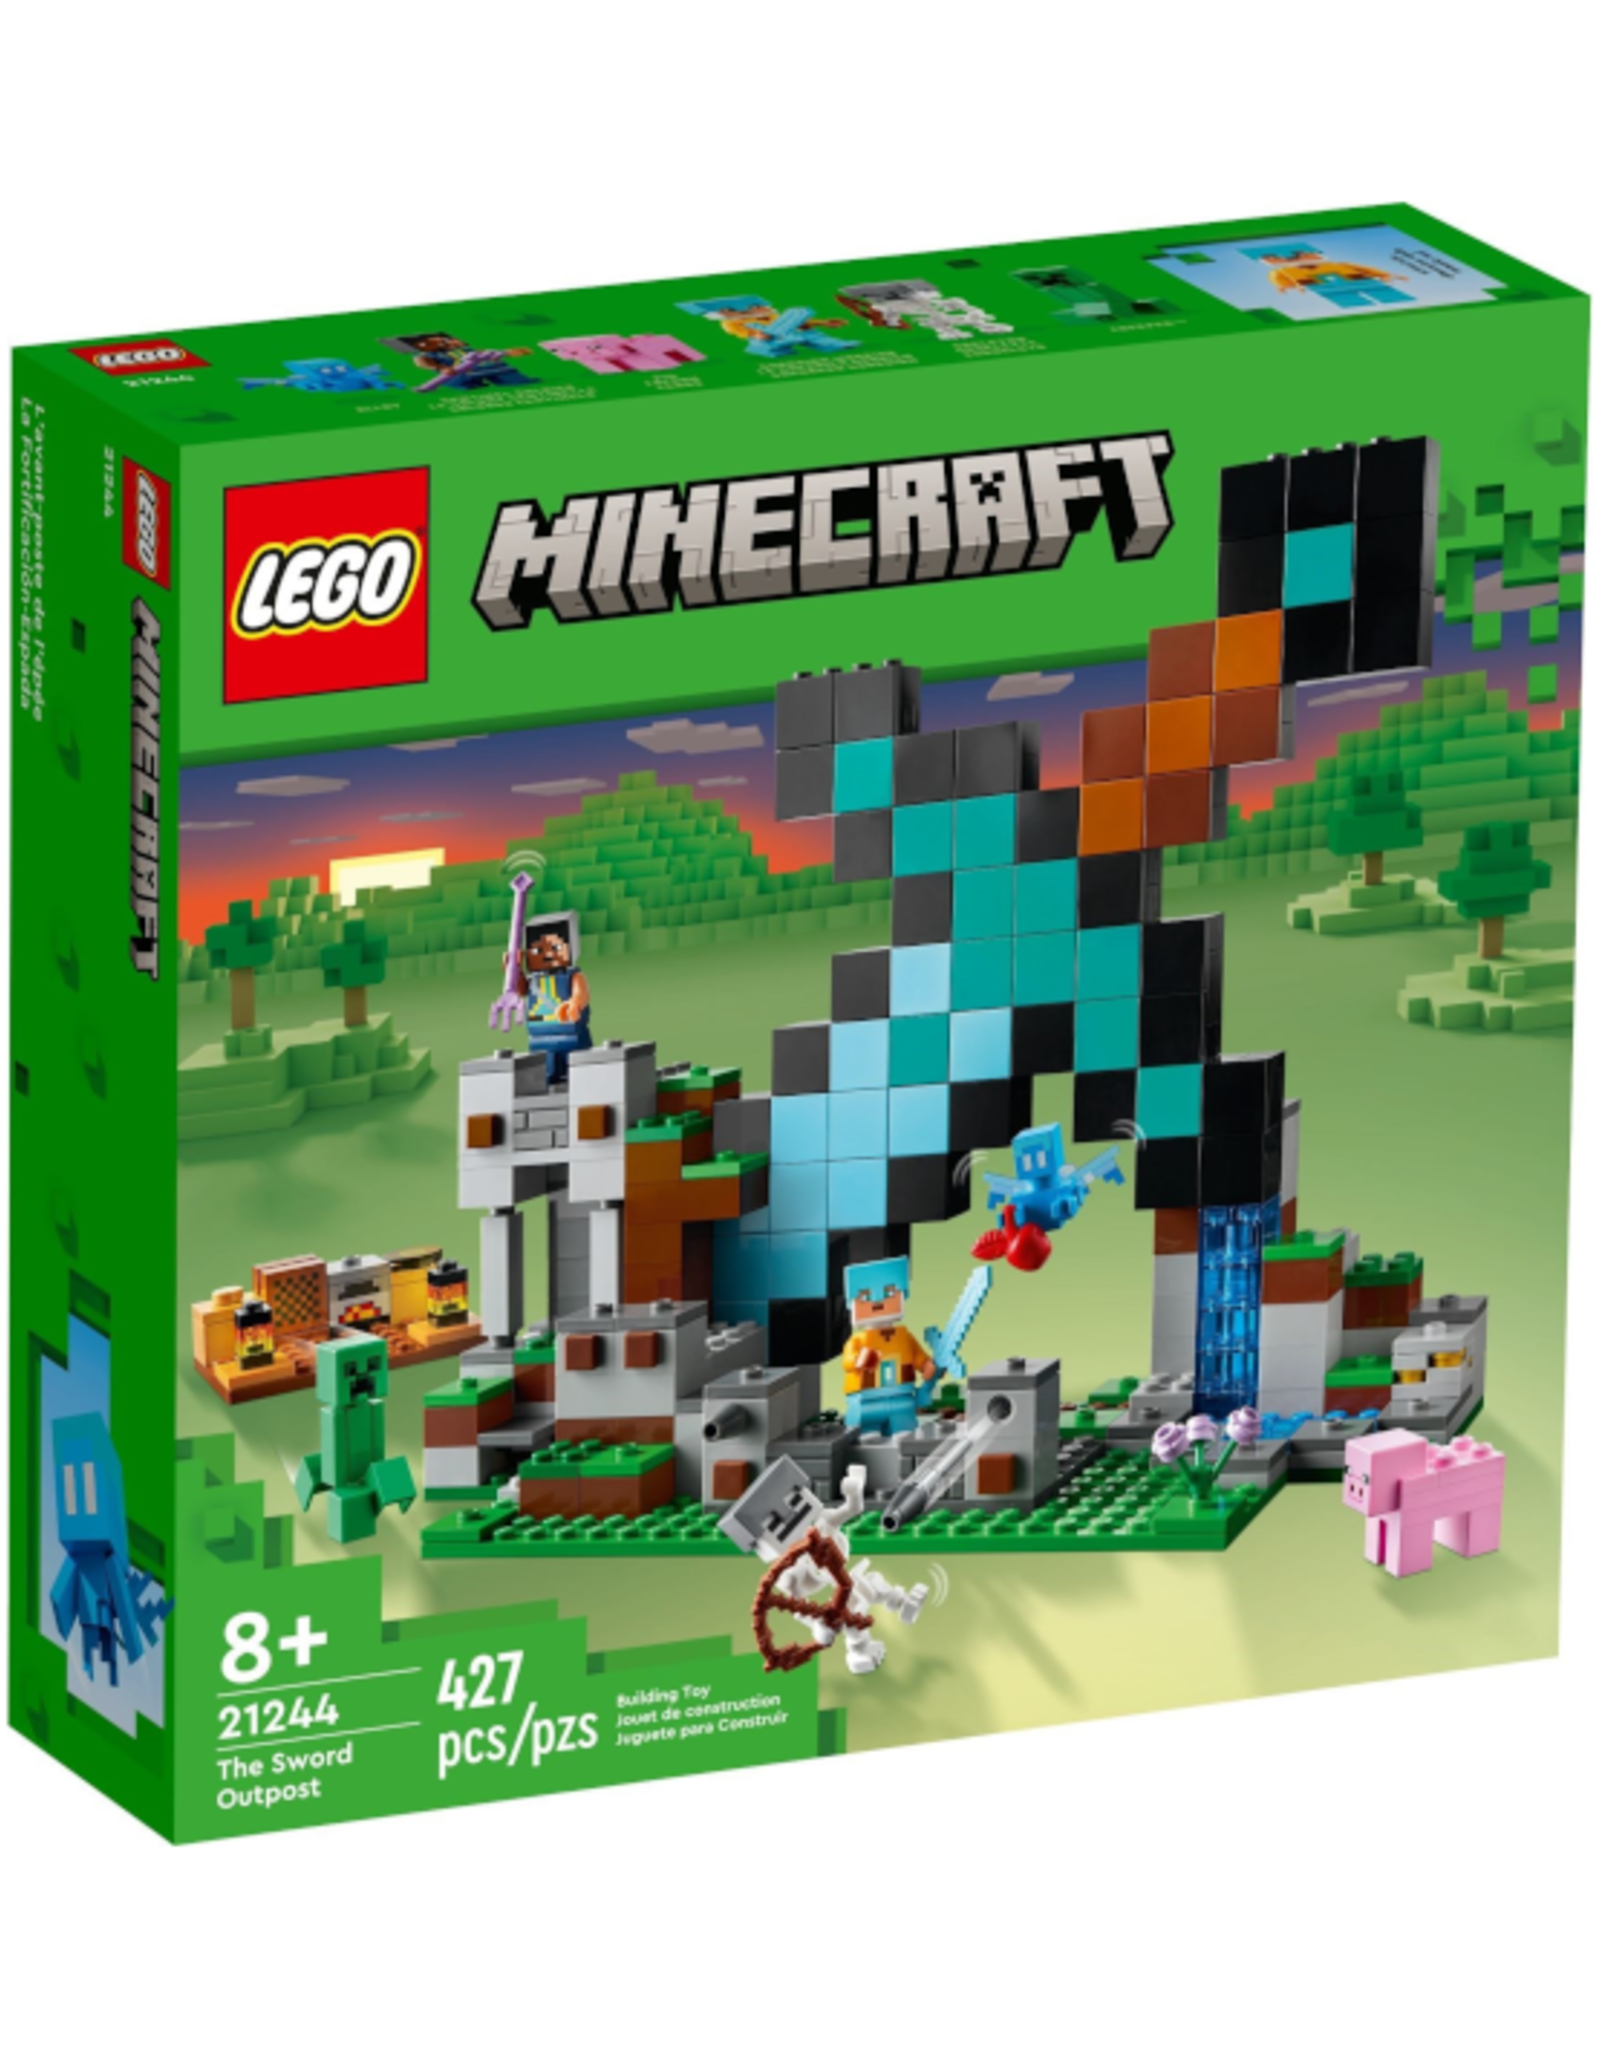 Lego Lego - Minecraft - 21244 - The Sword Outpost